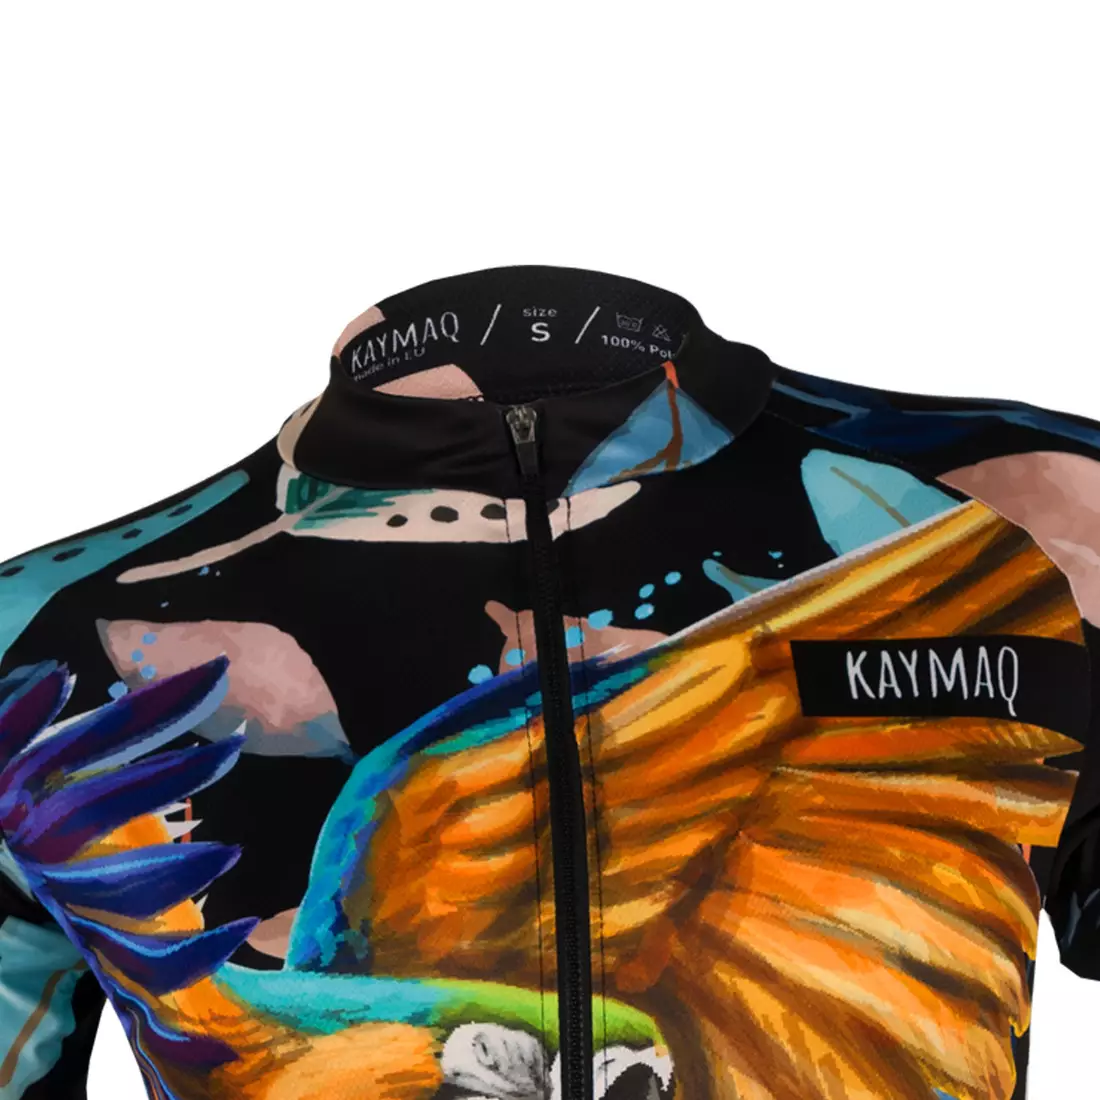 [Set] KAYMAQ DESIGN dámsky cyklistický dres s krátkym rukávom W28  + KAYMAQ DESIGN dámsky cyklistický dres W28 